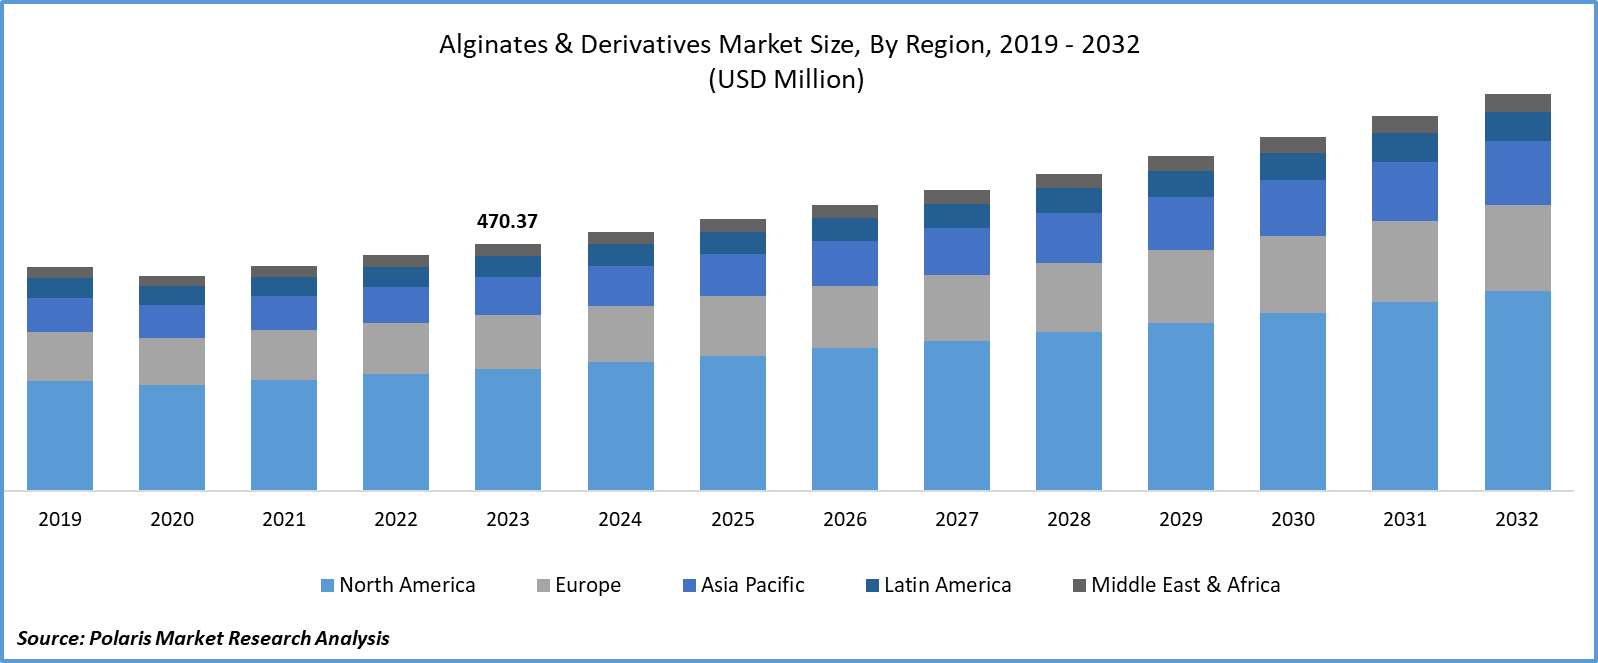 Alginates & Derivatives Market Size